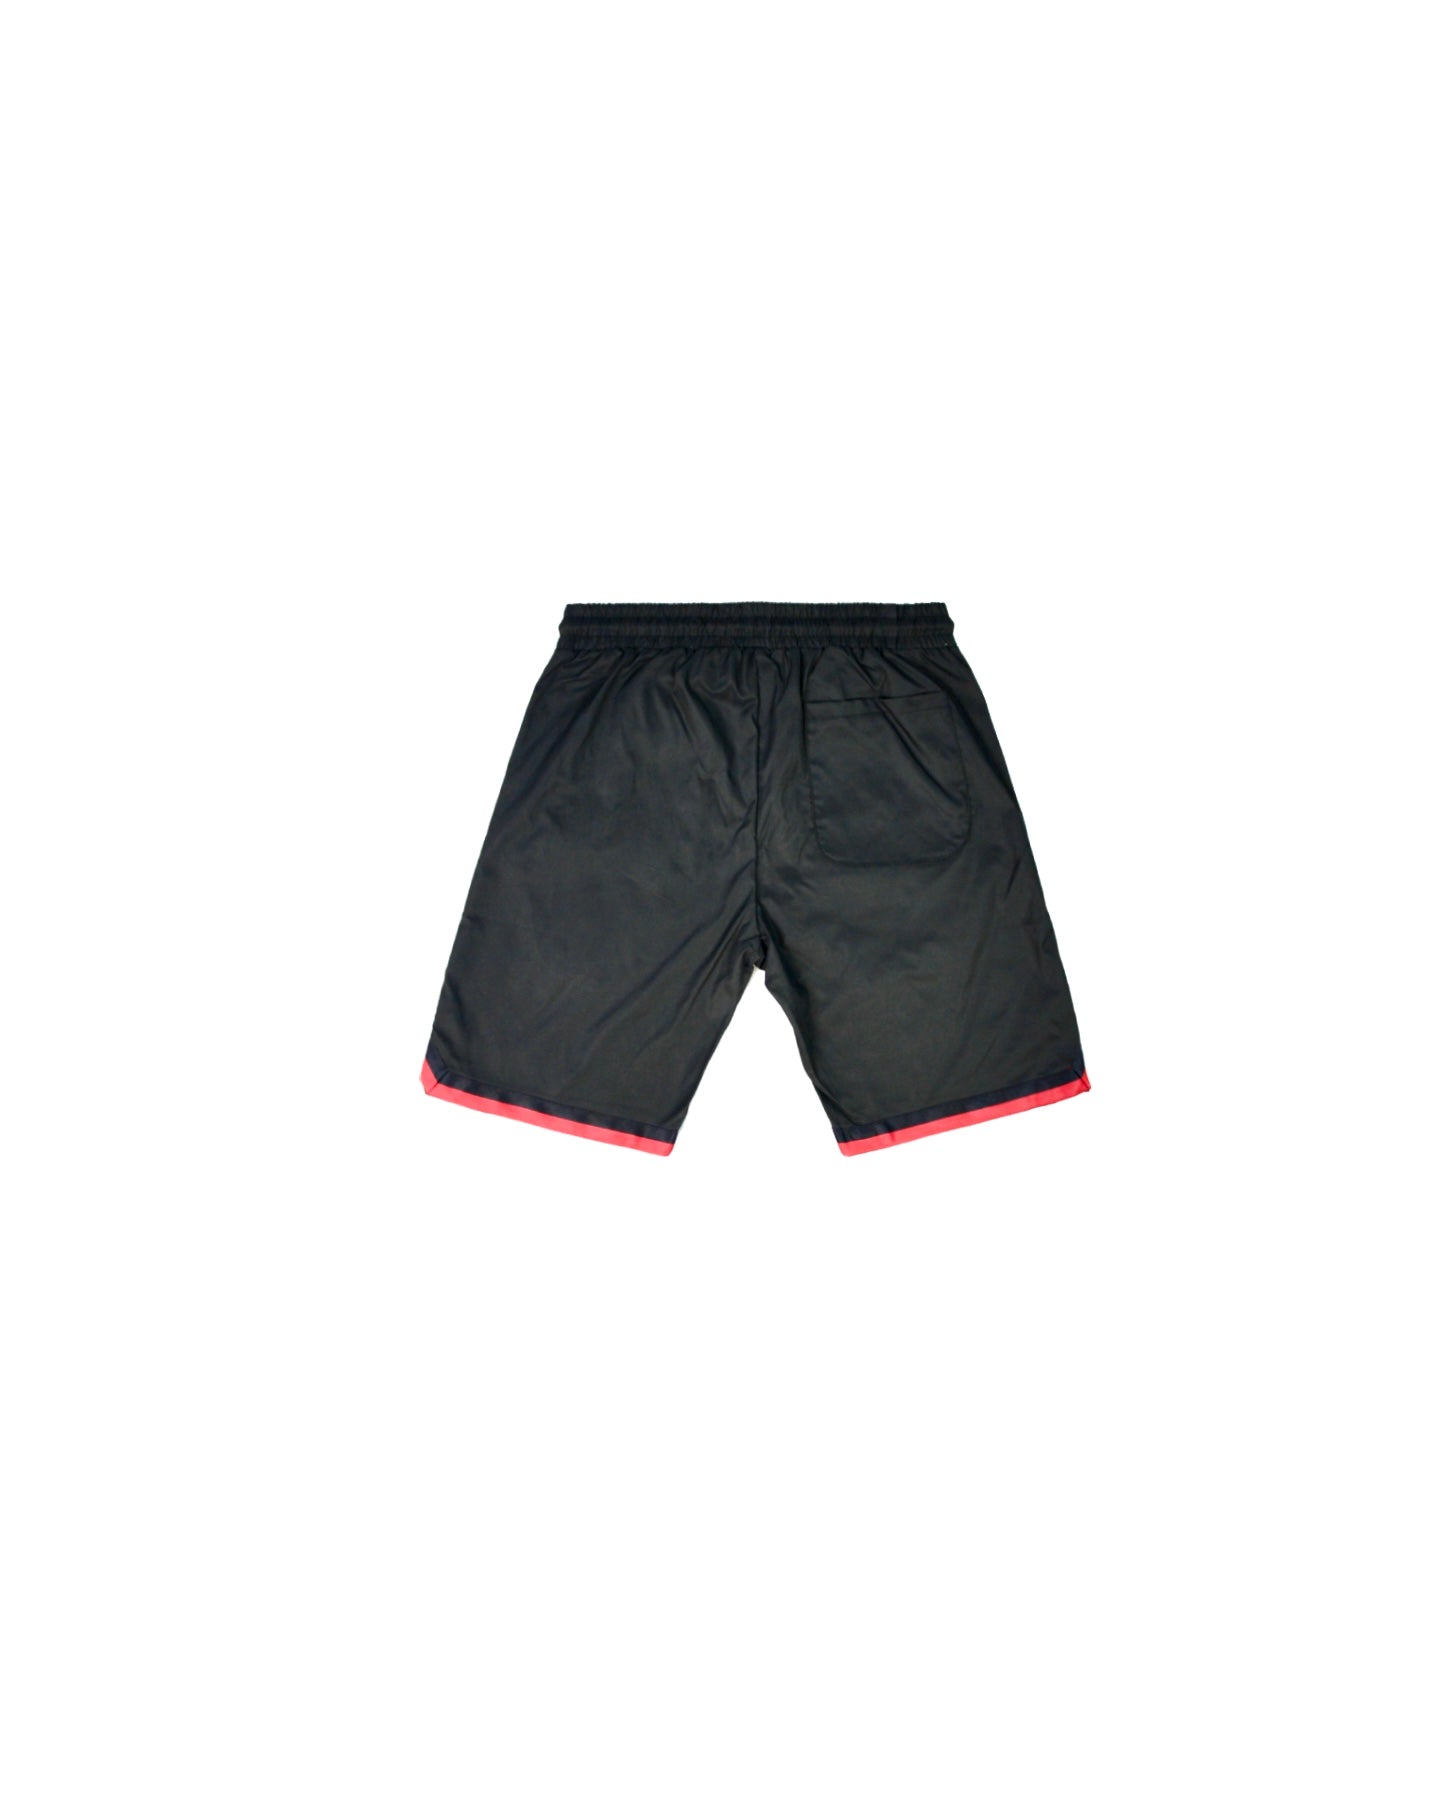 Black Red Stripe Zip Shorts